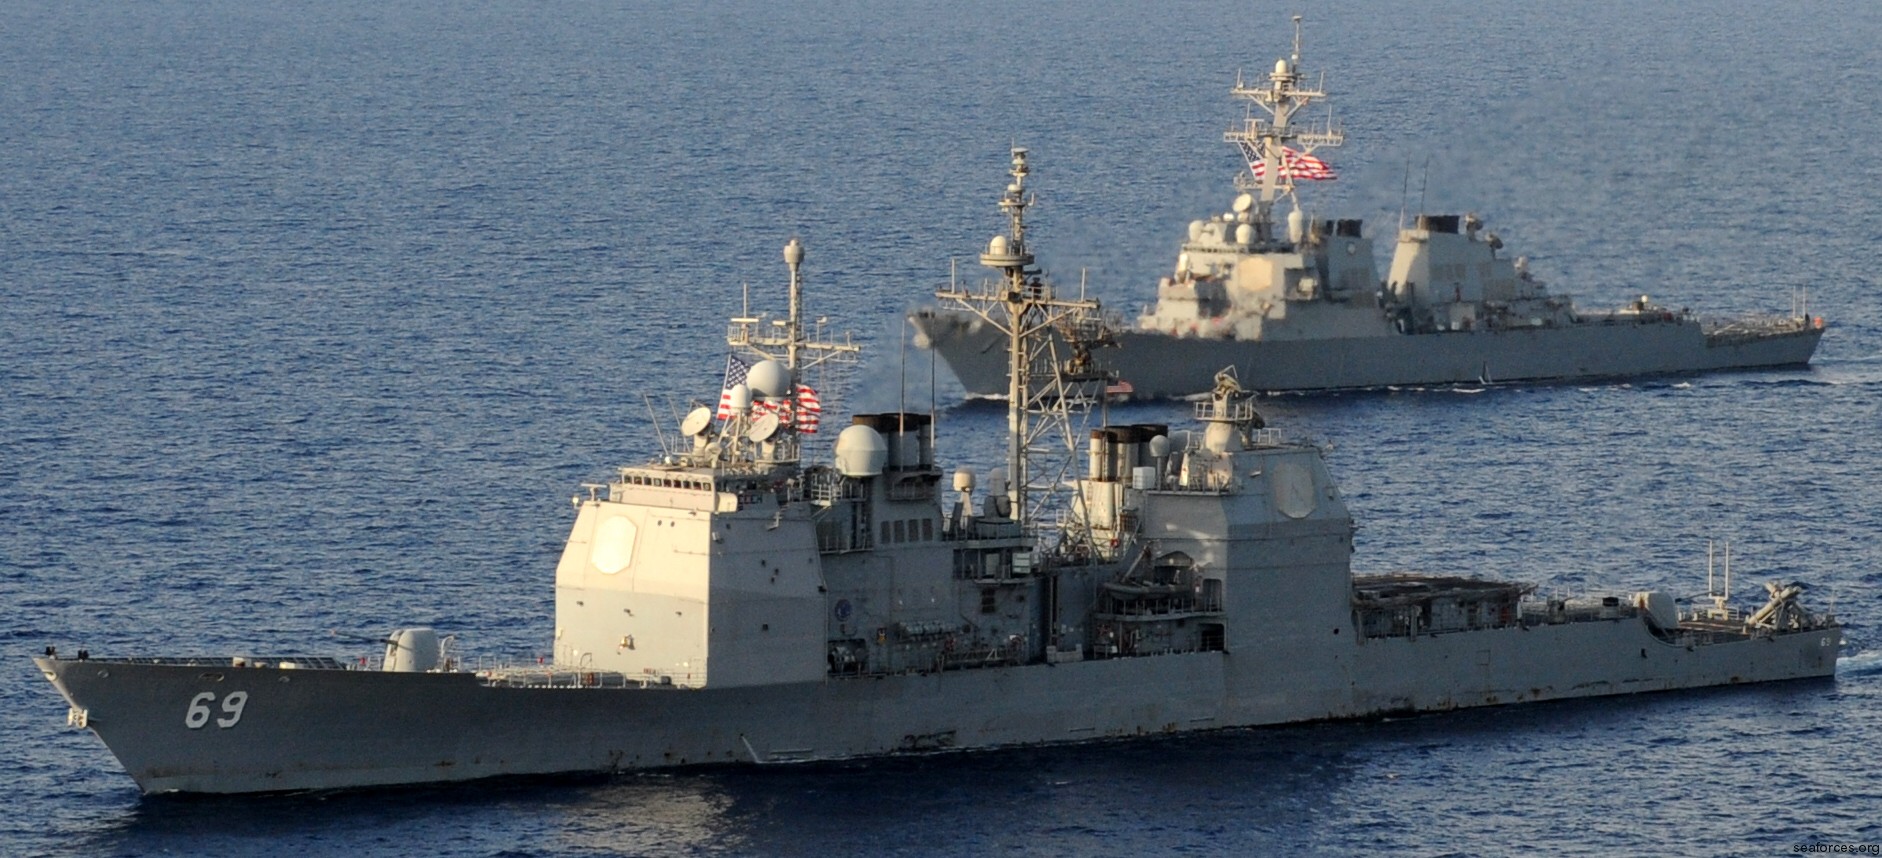 cg-69 uss vicksburg ticonderoga class guided missile cruiser us navy 15